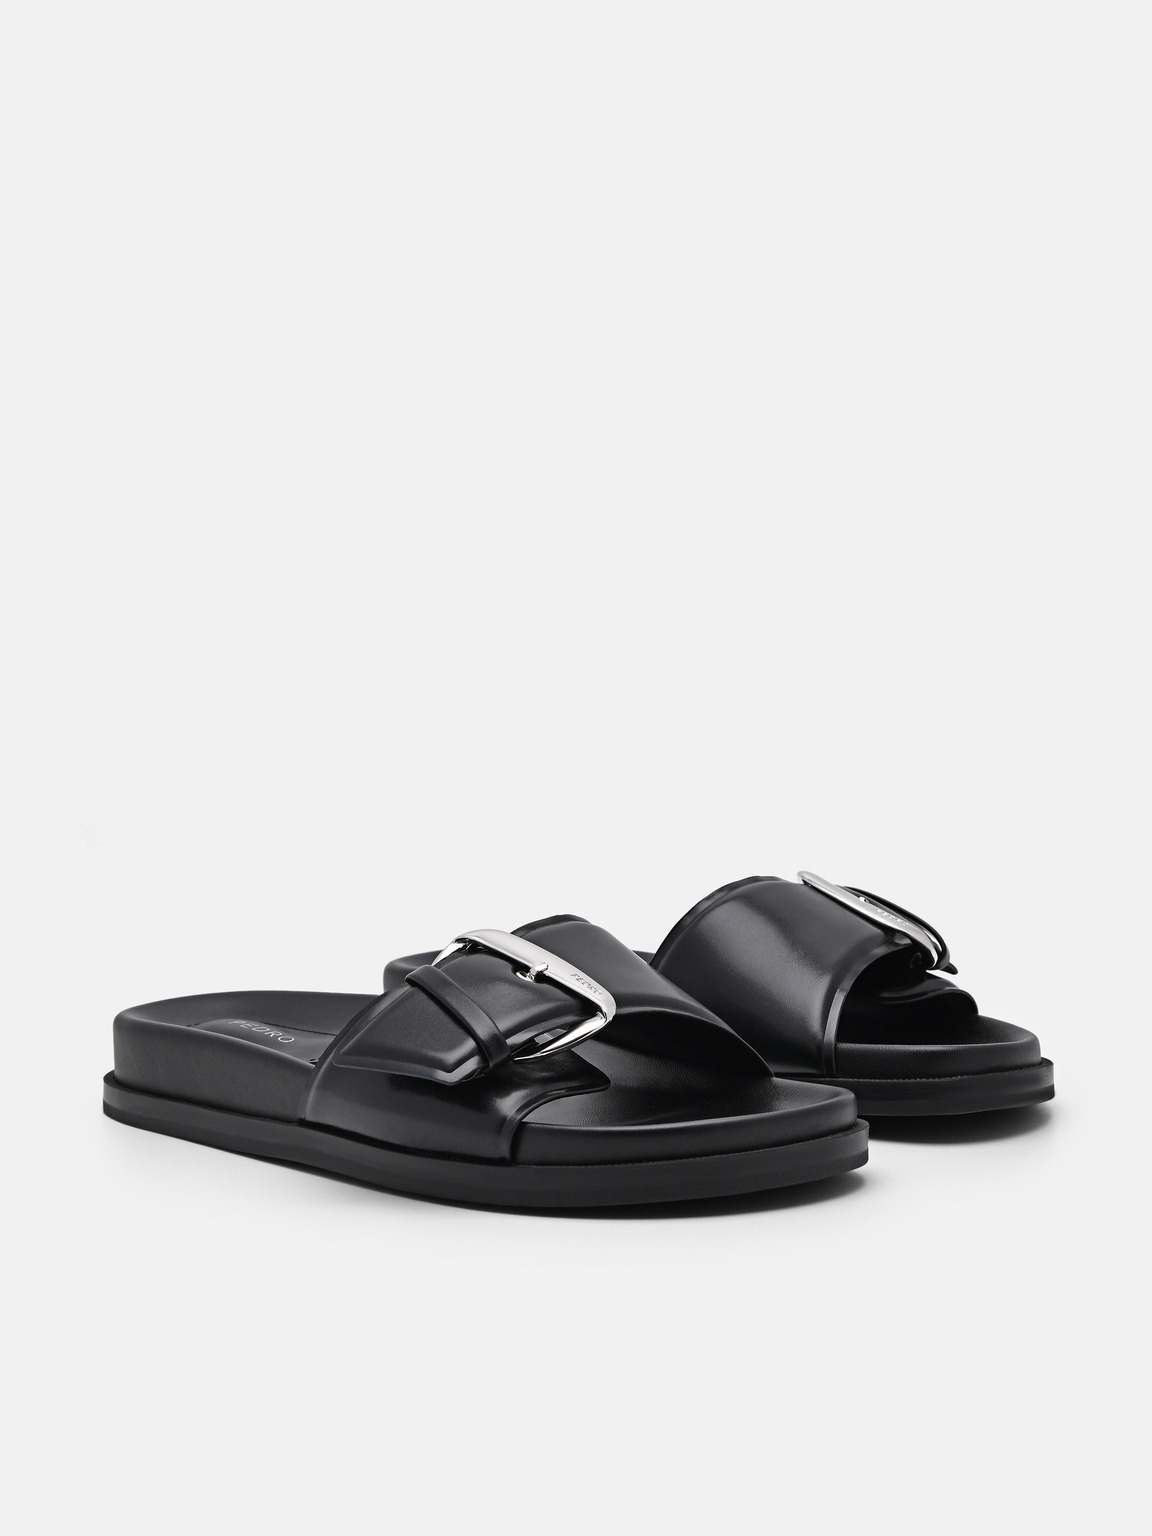 Alyda Slip-On Sandals, Black